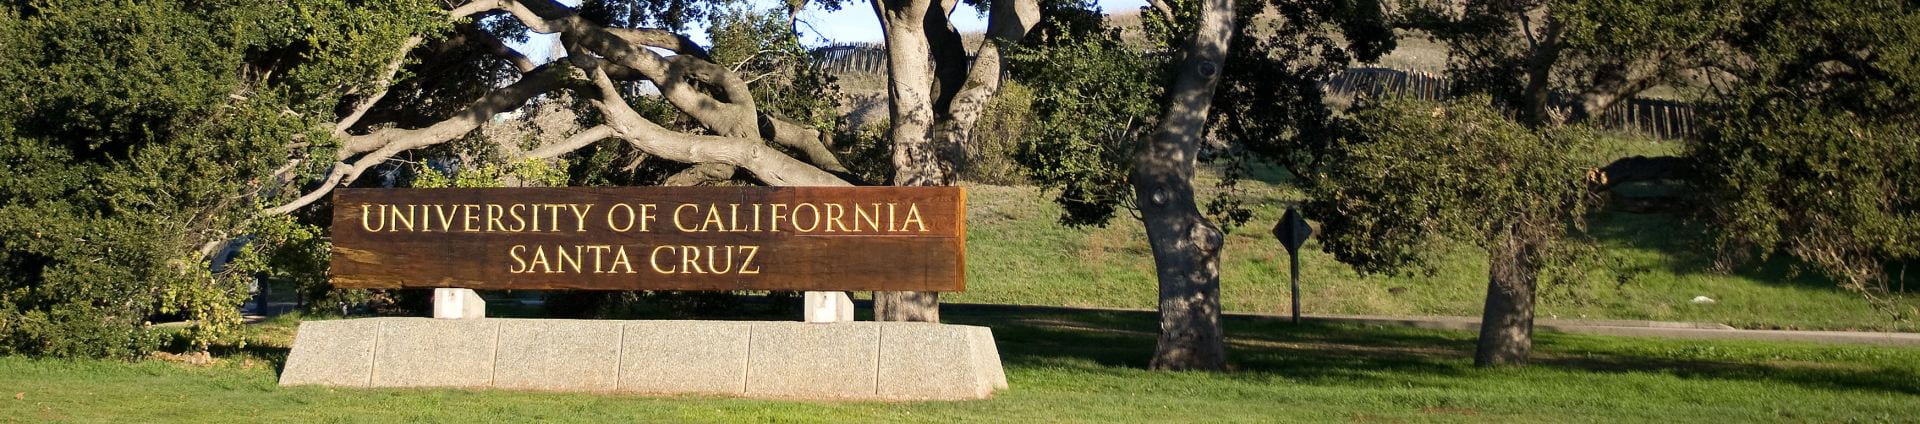 UC Santa Cruz front entrance sign